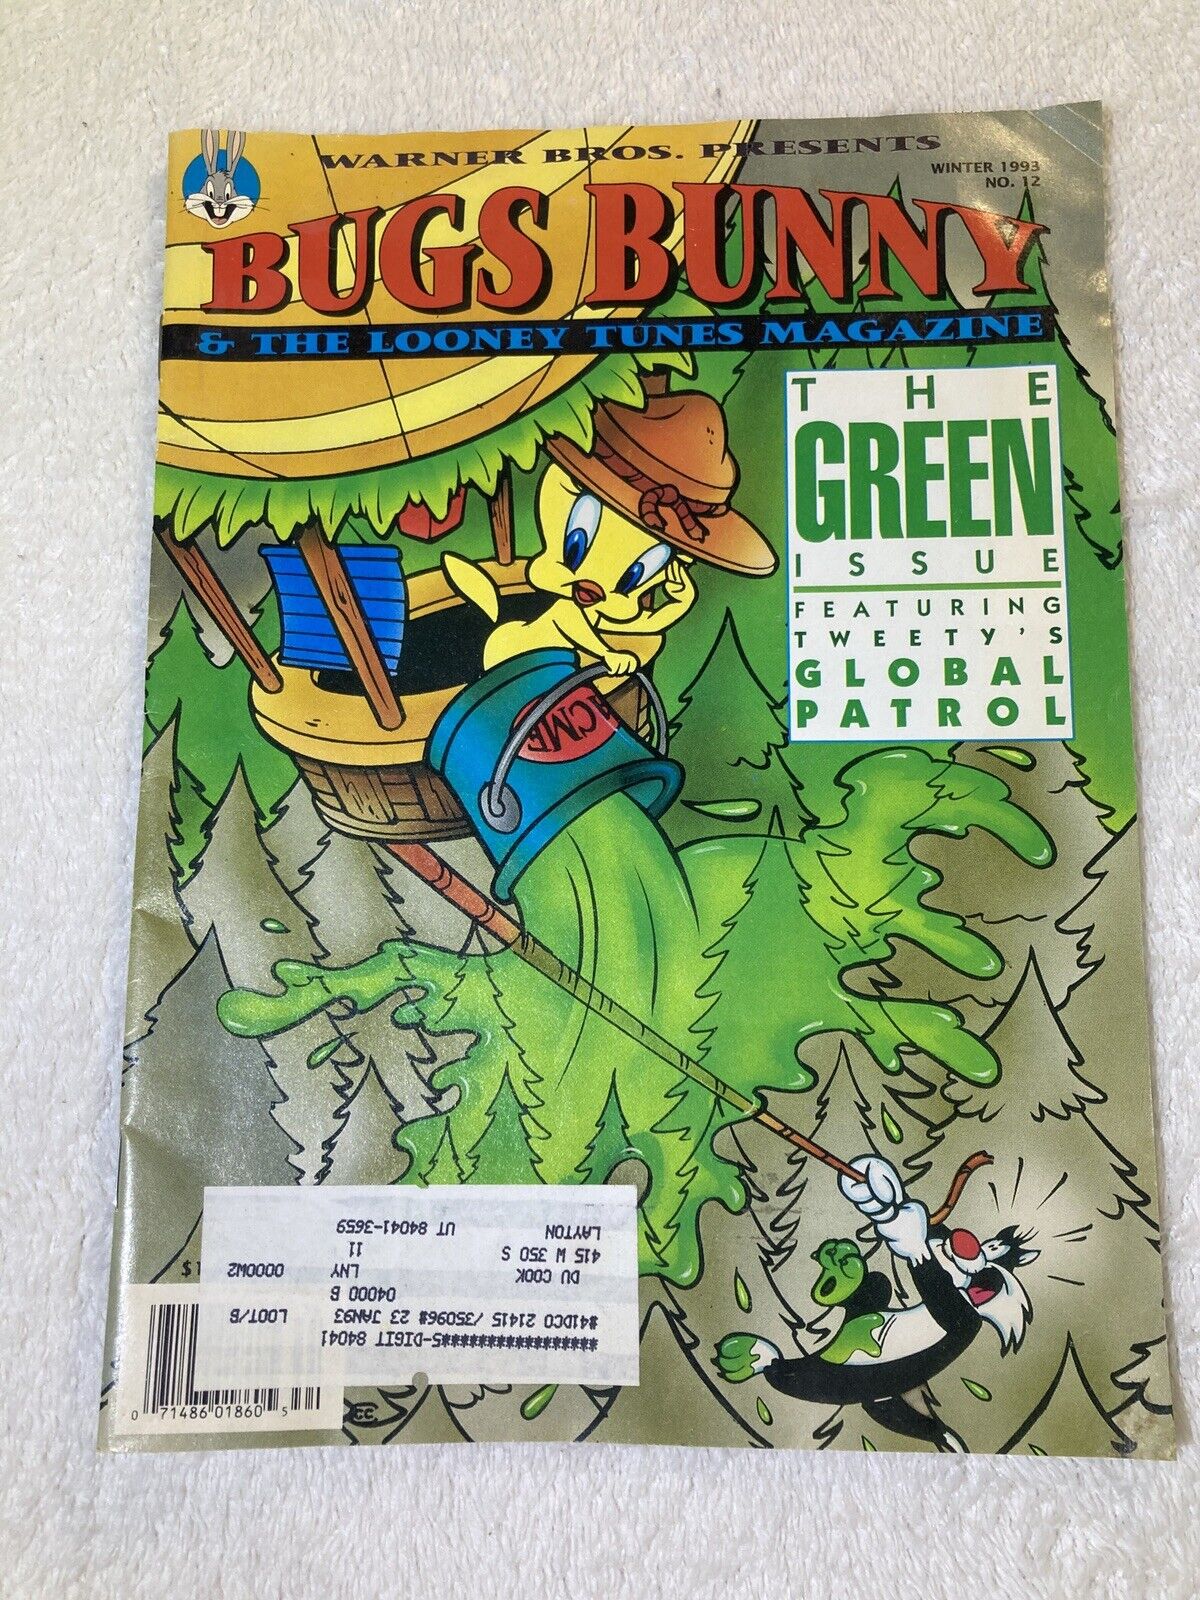 Vintage Warner Bros. Bugs Bunny & The Looney Tunes Magazine Winter 1993 #12 issu